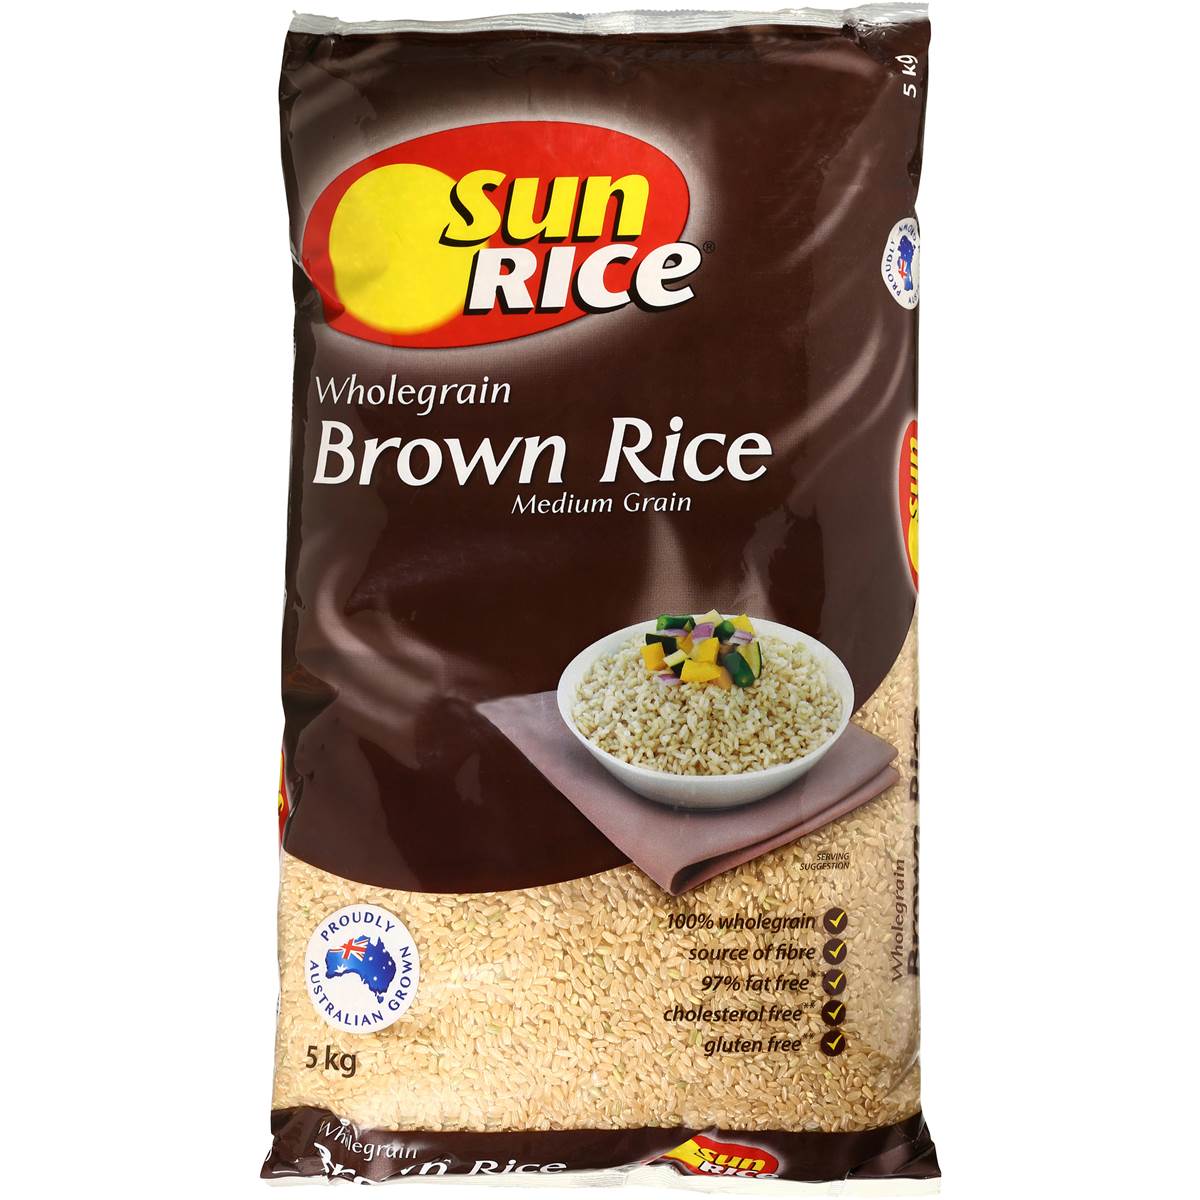 Kohinoor Charminar Select Basmati Rice Price - Buy Online at ₹449 in India